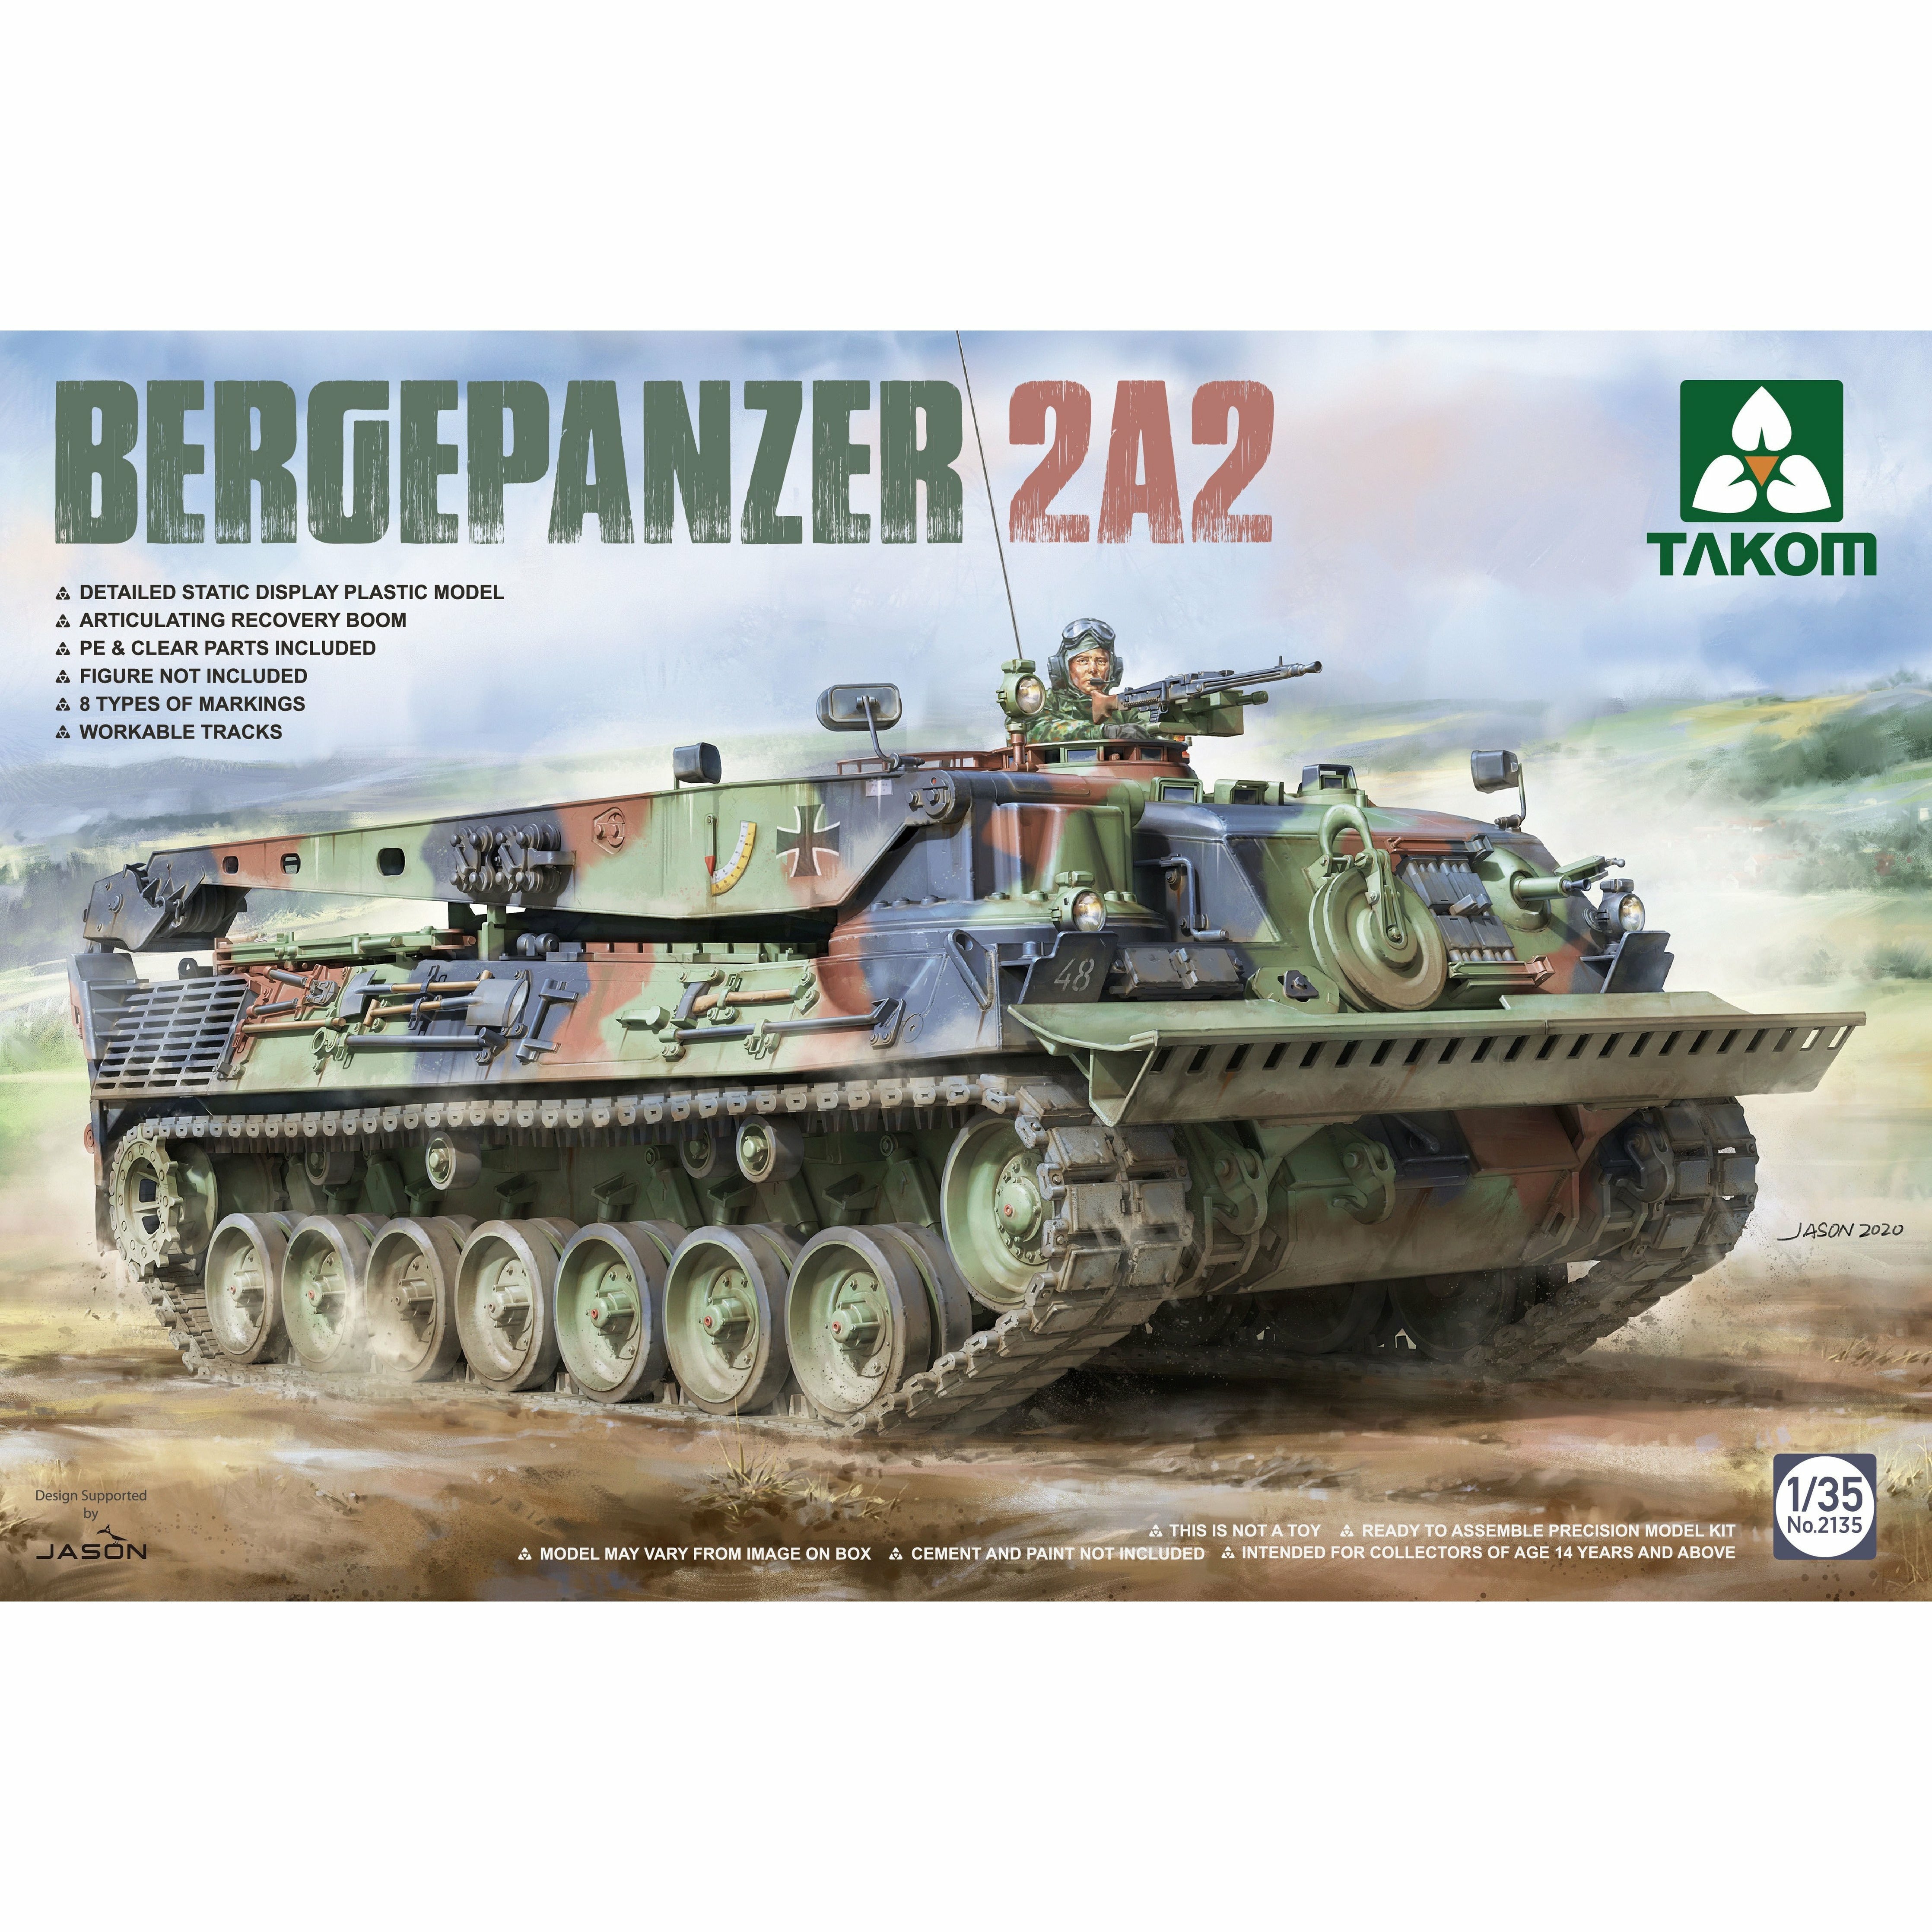 Bergepanzer 2A2 1/35 by Takom